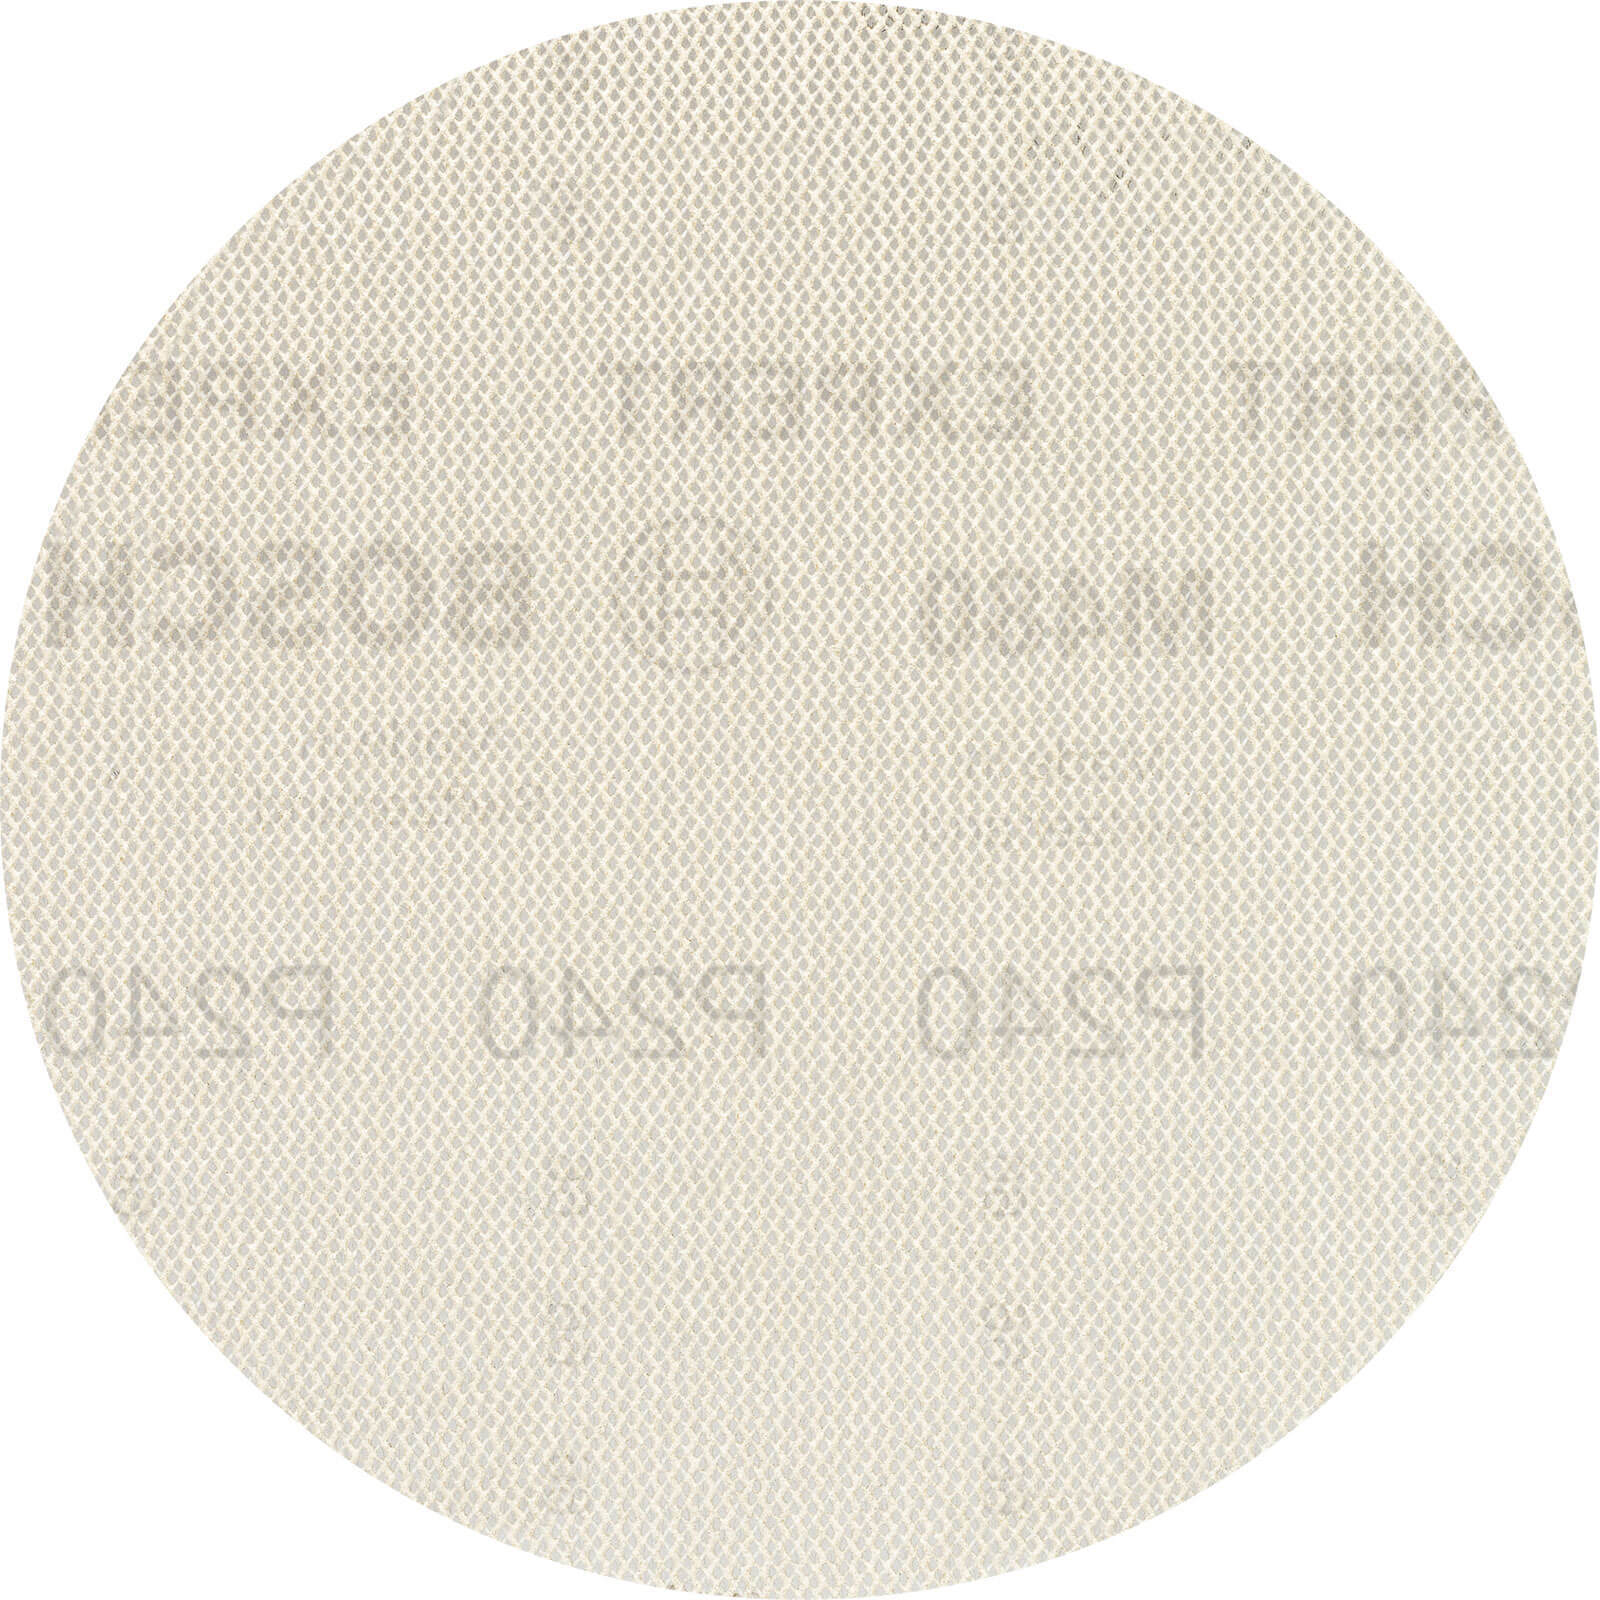 Image of Bosch Expert M480 125mm Net Abrasive Sanding Disc 125mm 240g Pack of 5